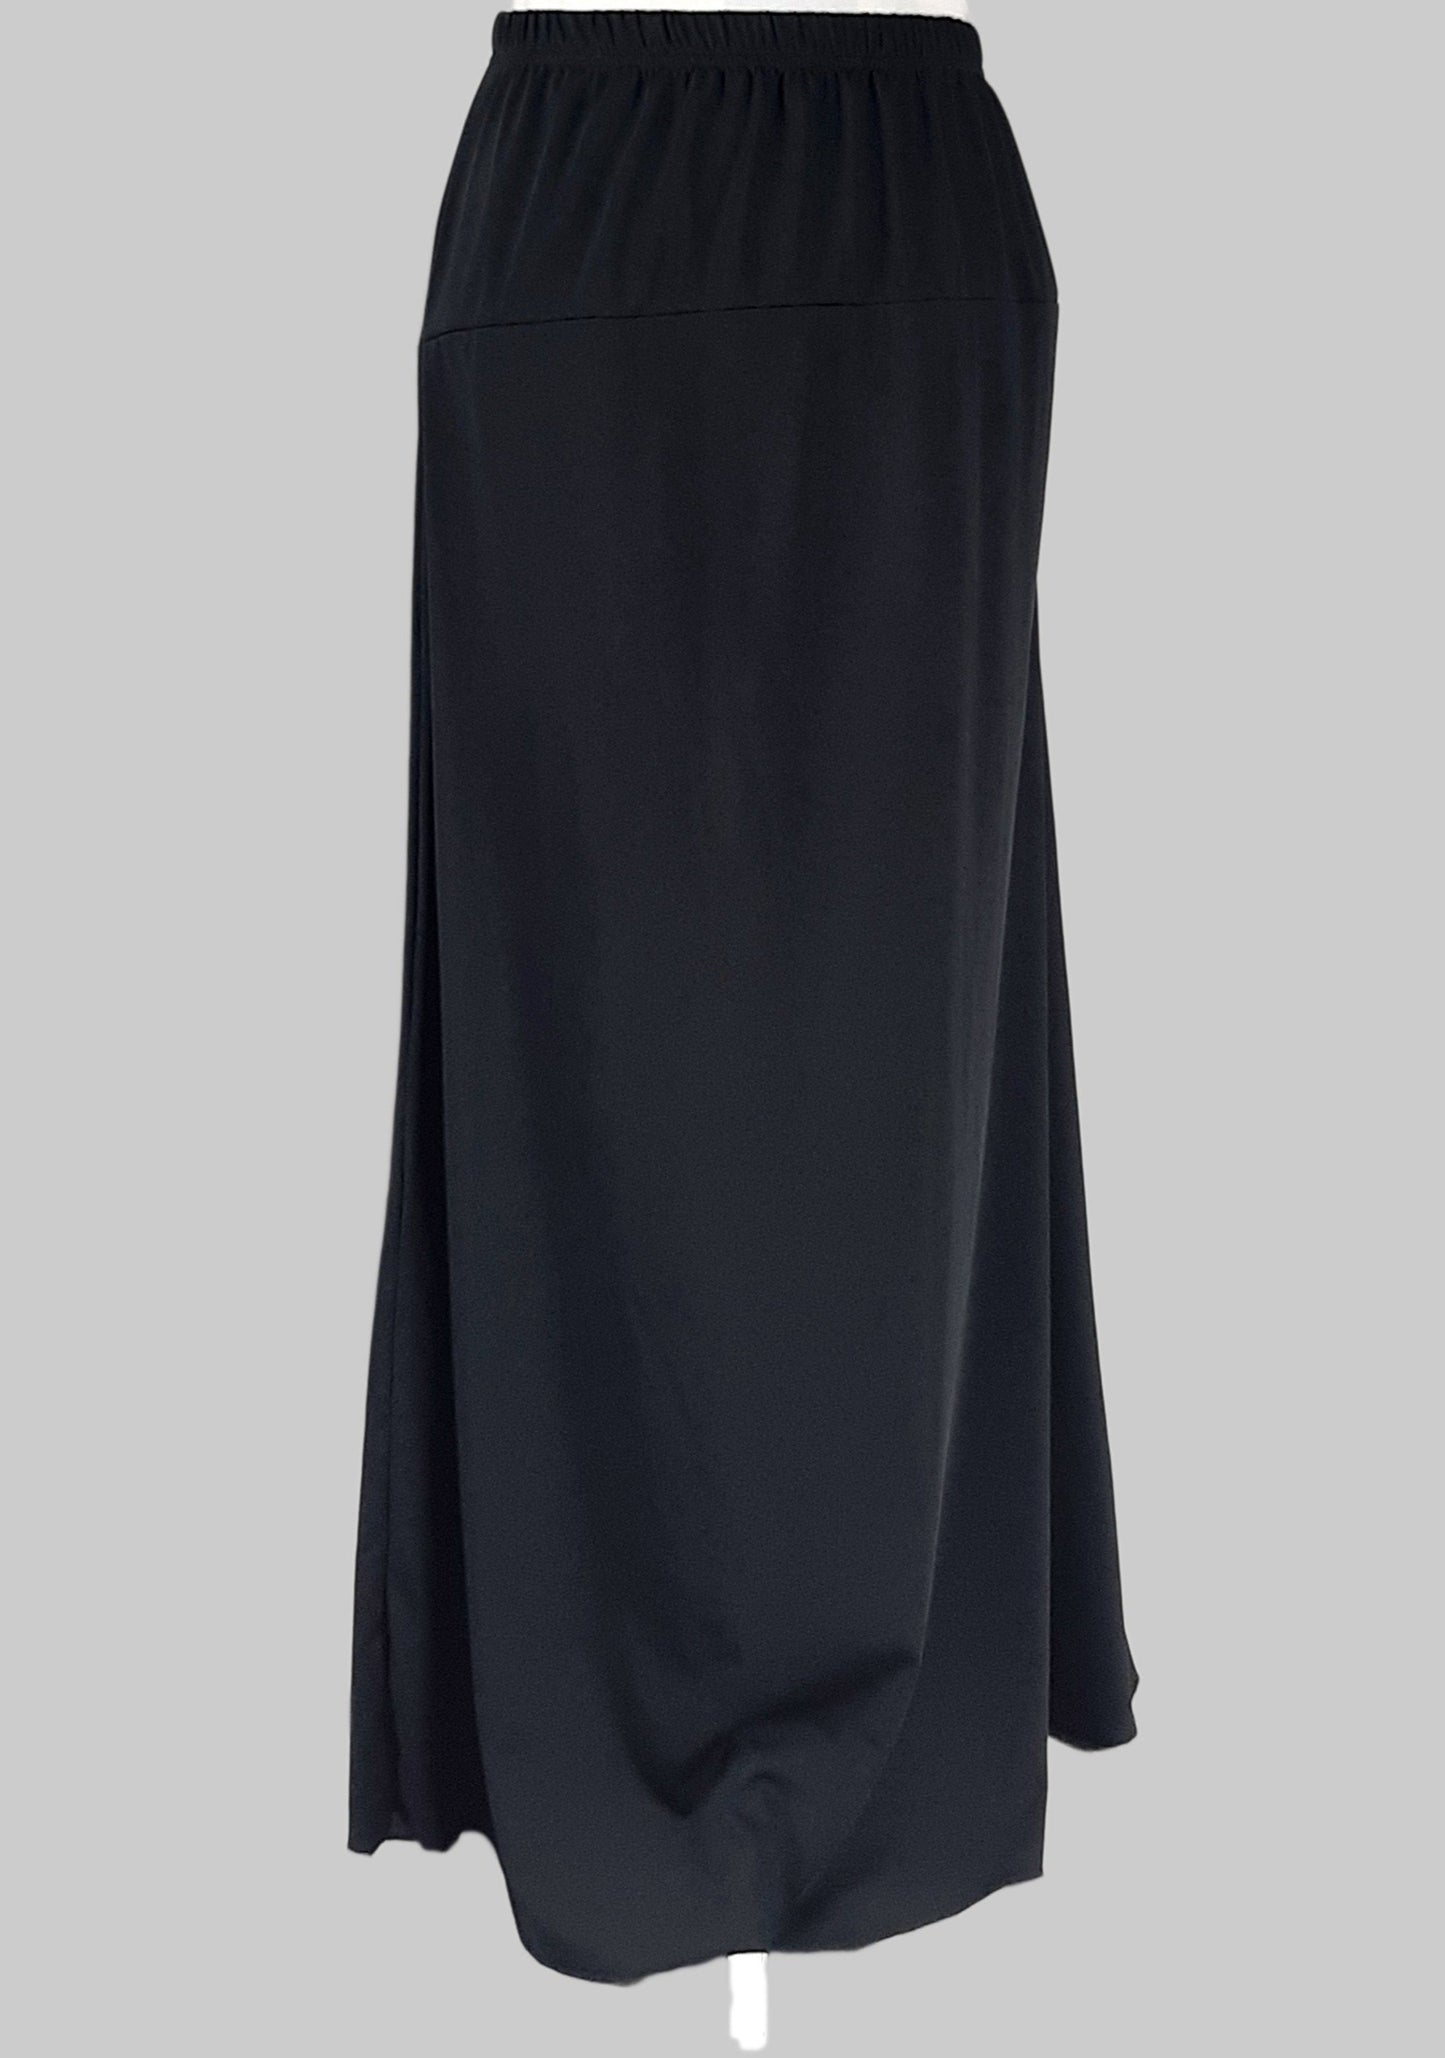 Non Bubble Jersey Skirts-Black-Skirt-Smile Europe Wholesale